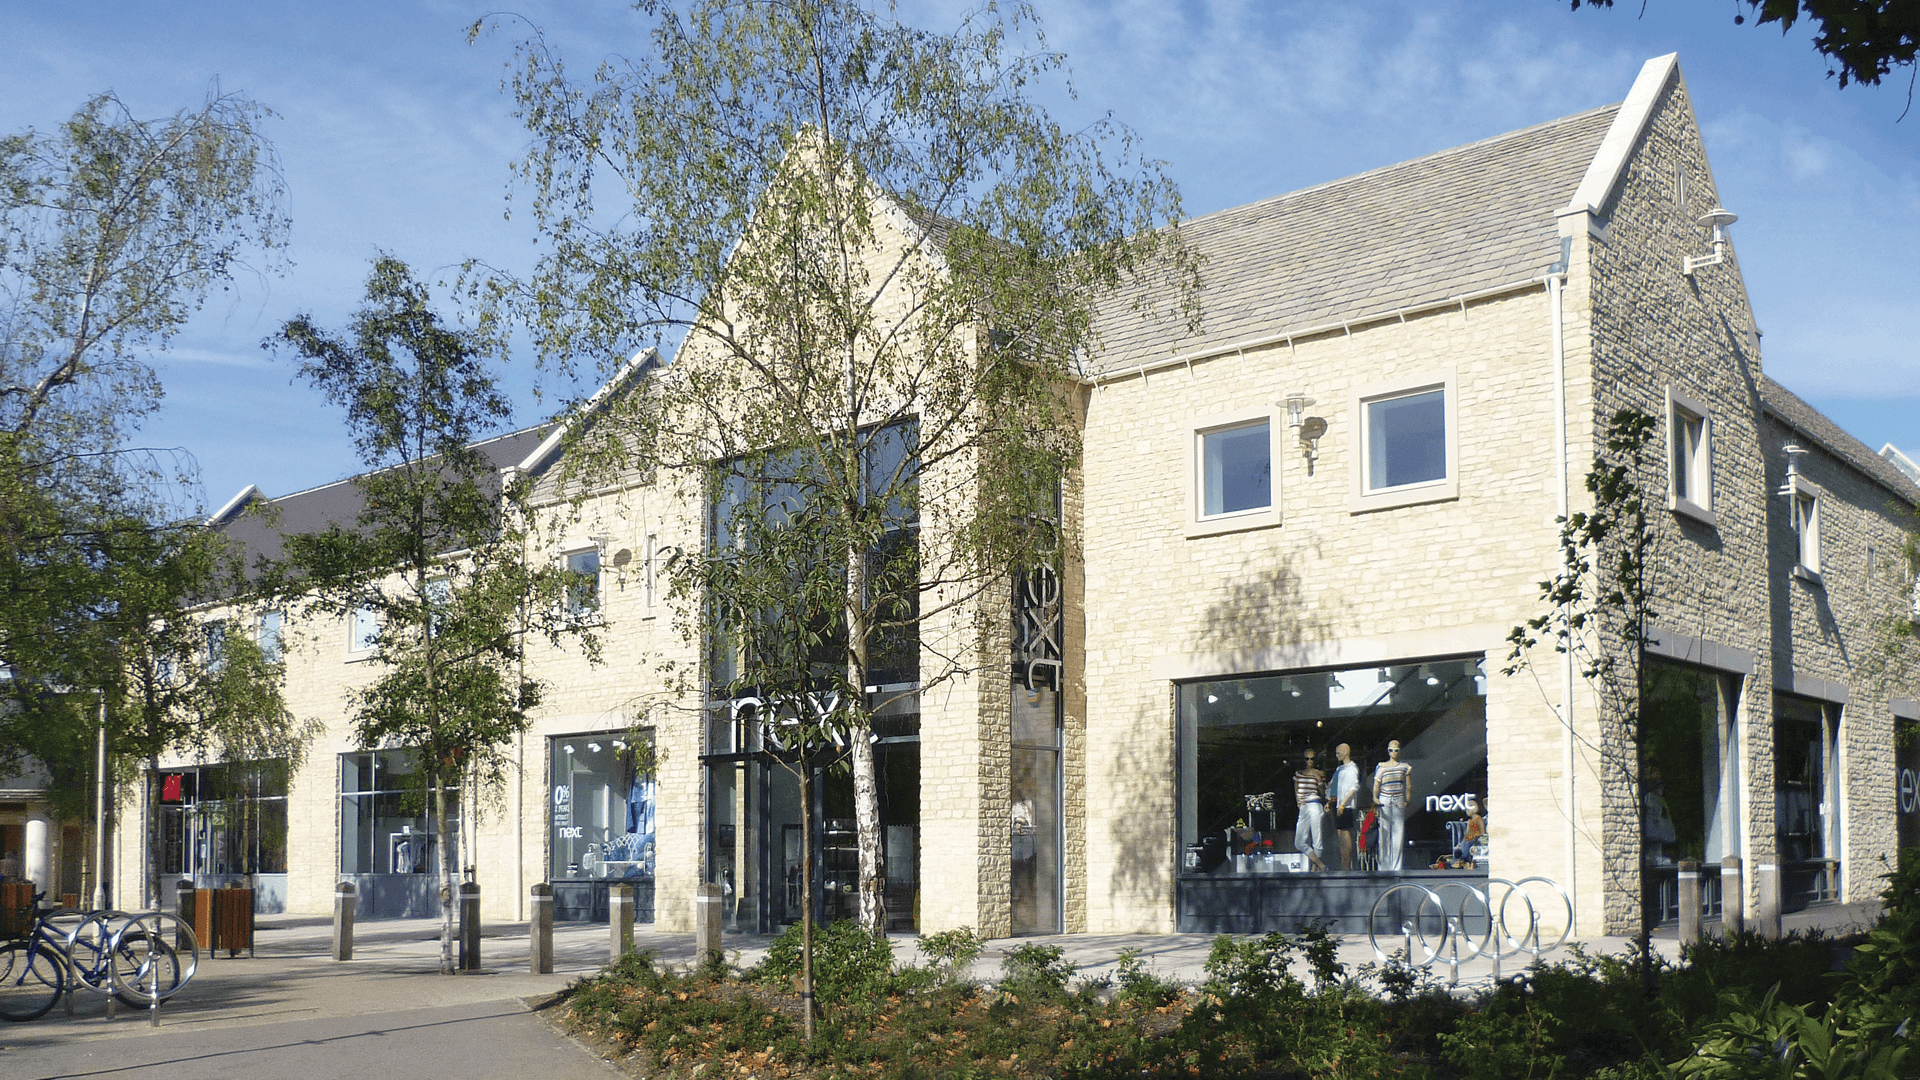 Woolgate Shopping Centre, Witney